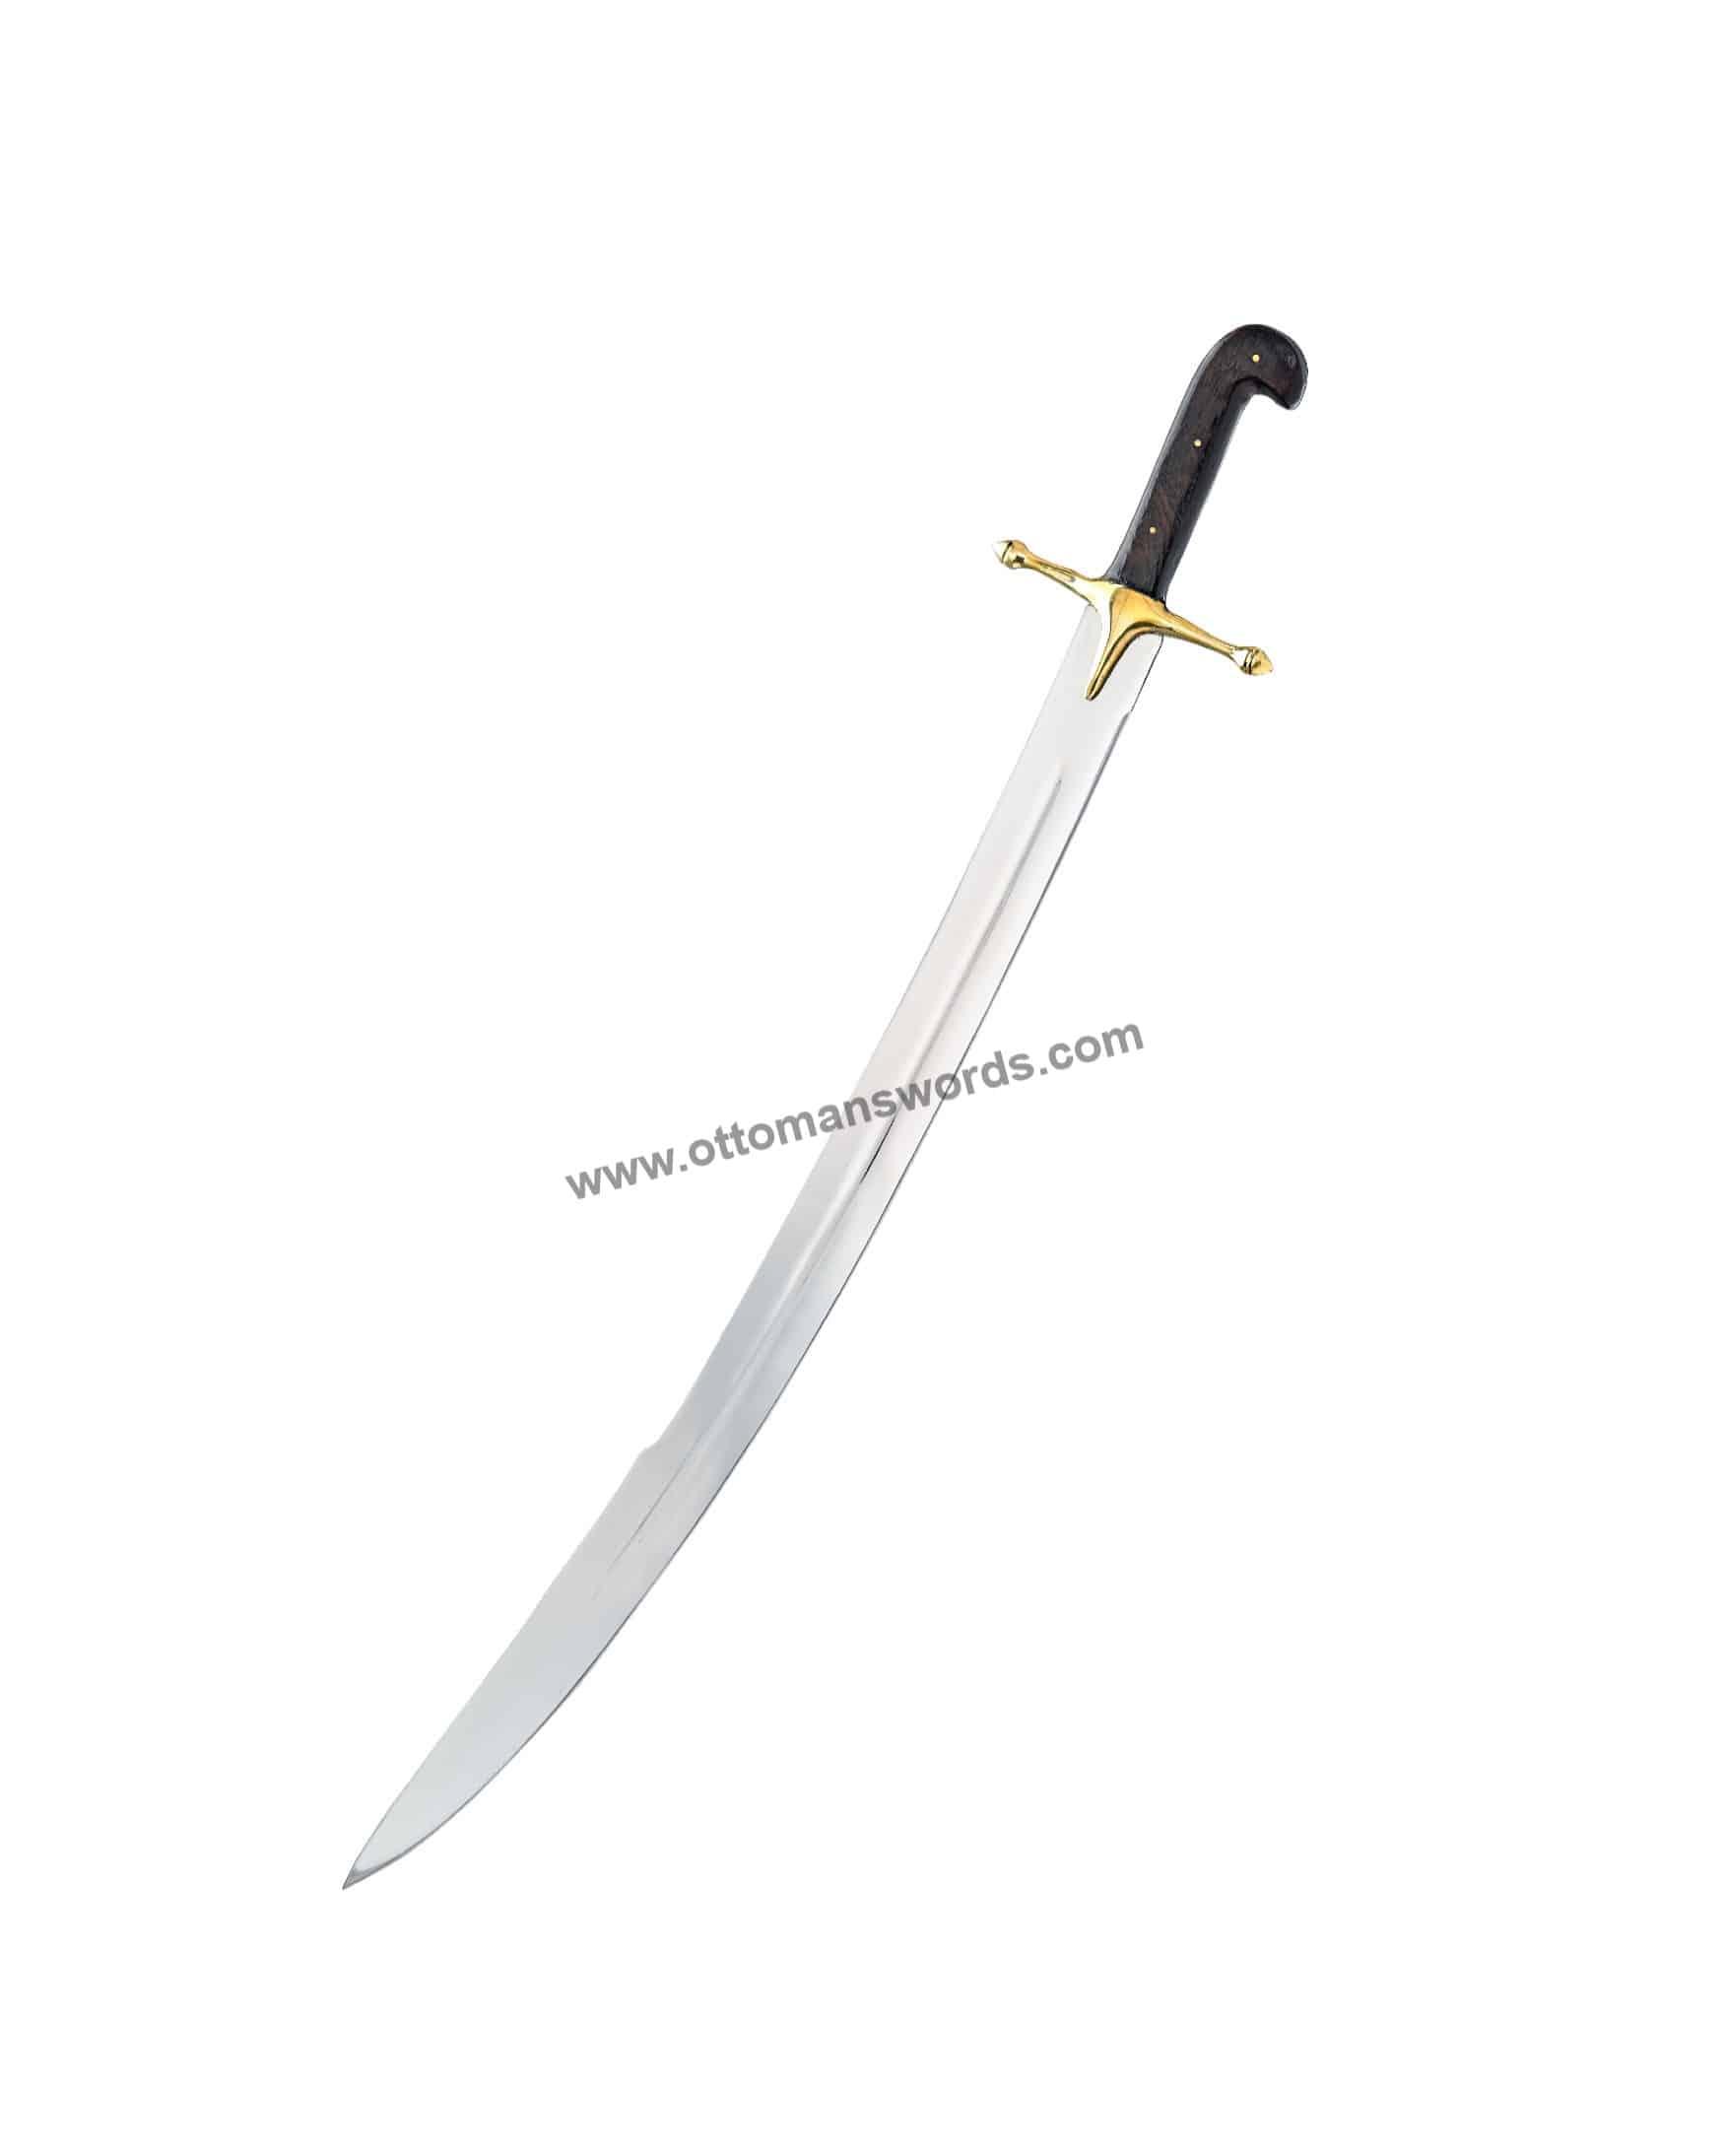 ottoman saber swords